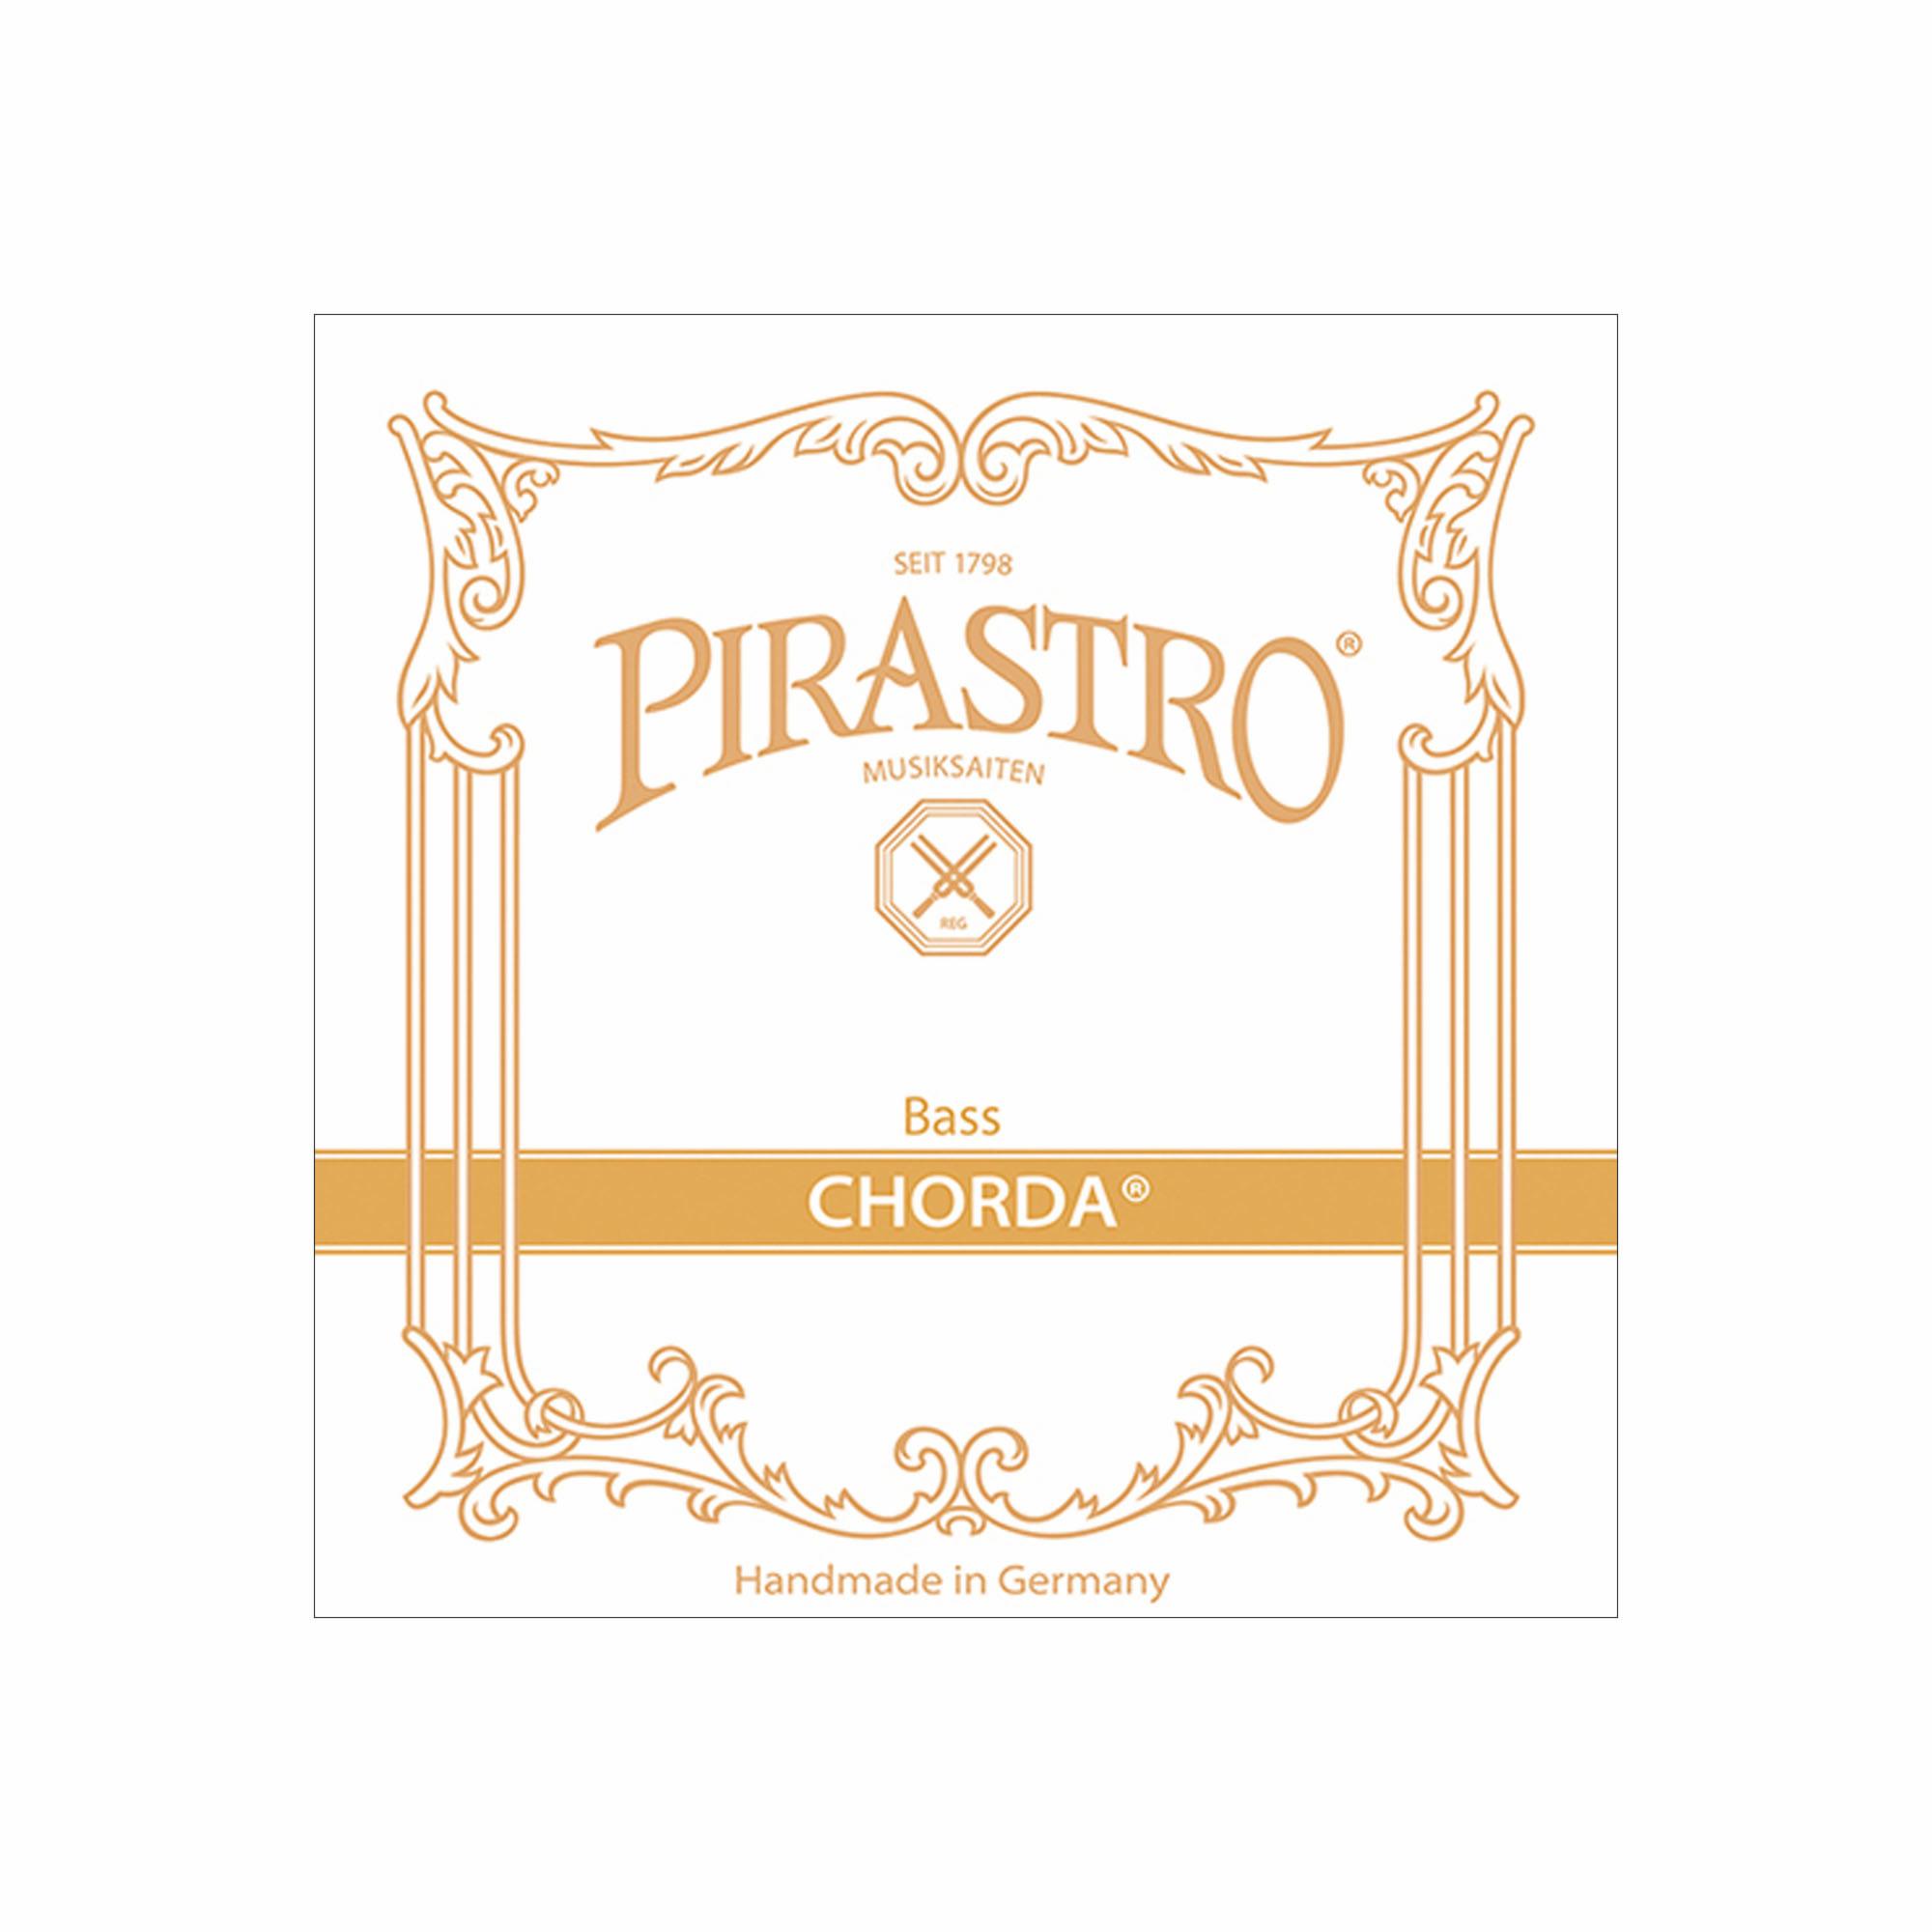 Pirastro Chorda Bass Strings